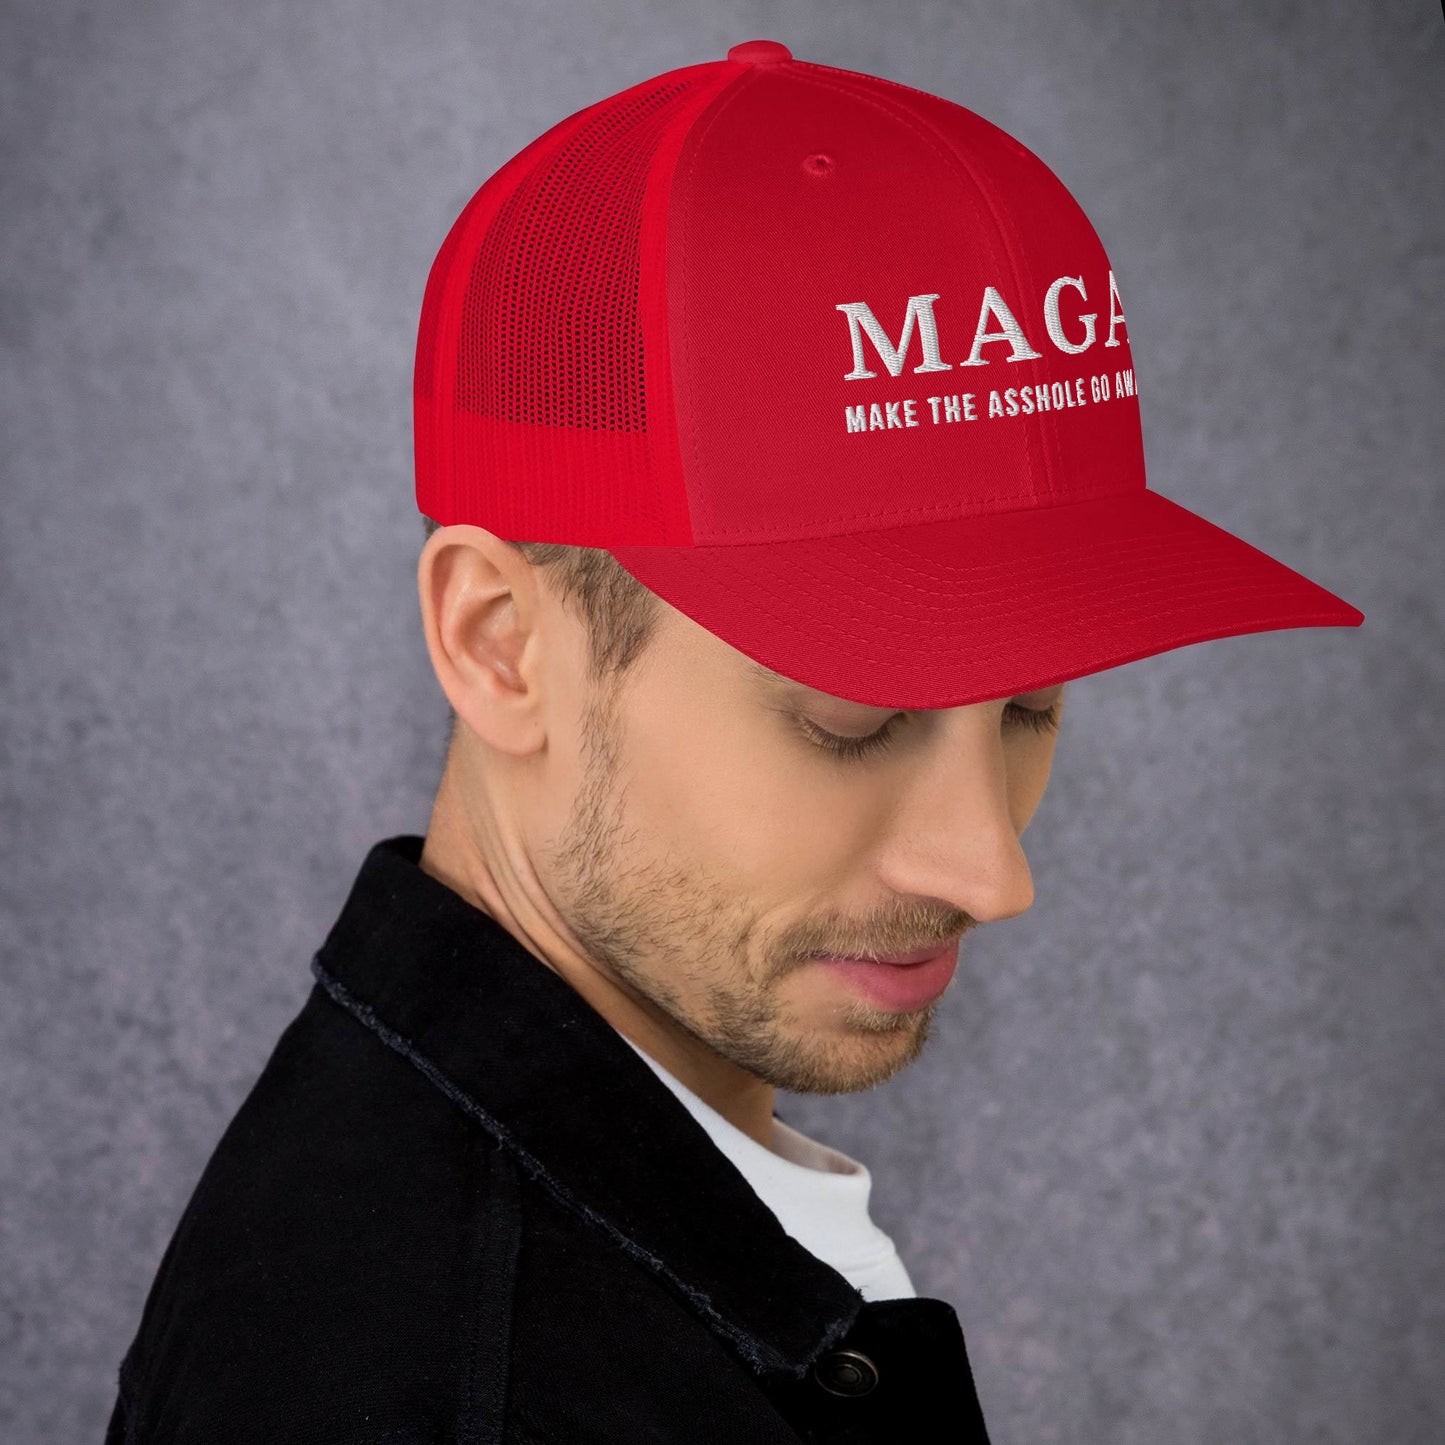 MAGA Make The Asshole Go Away Trucker Cap, Anti Trump Embroidered Ha